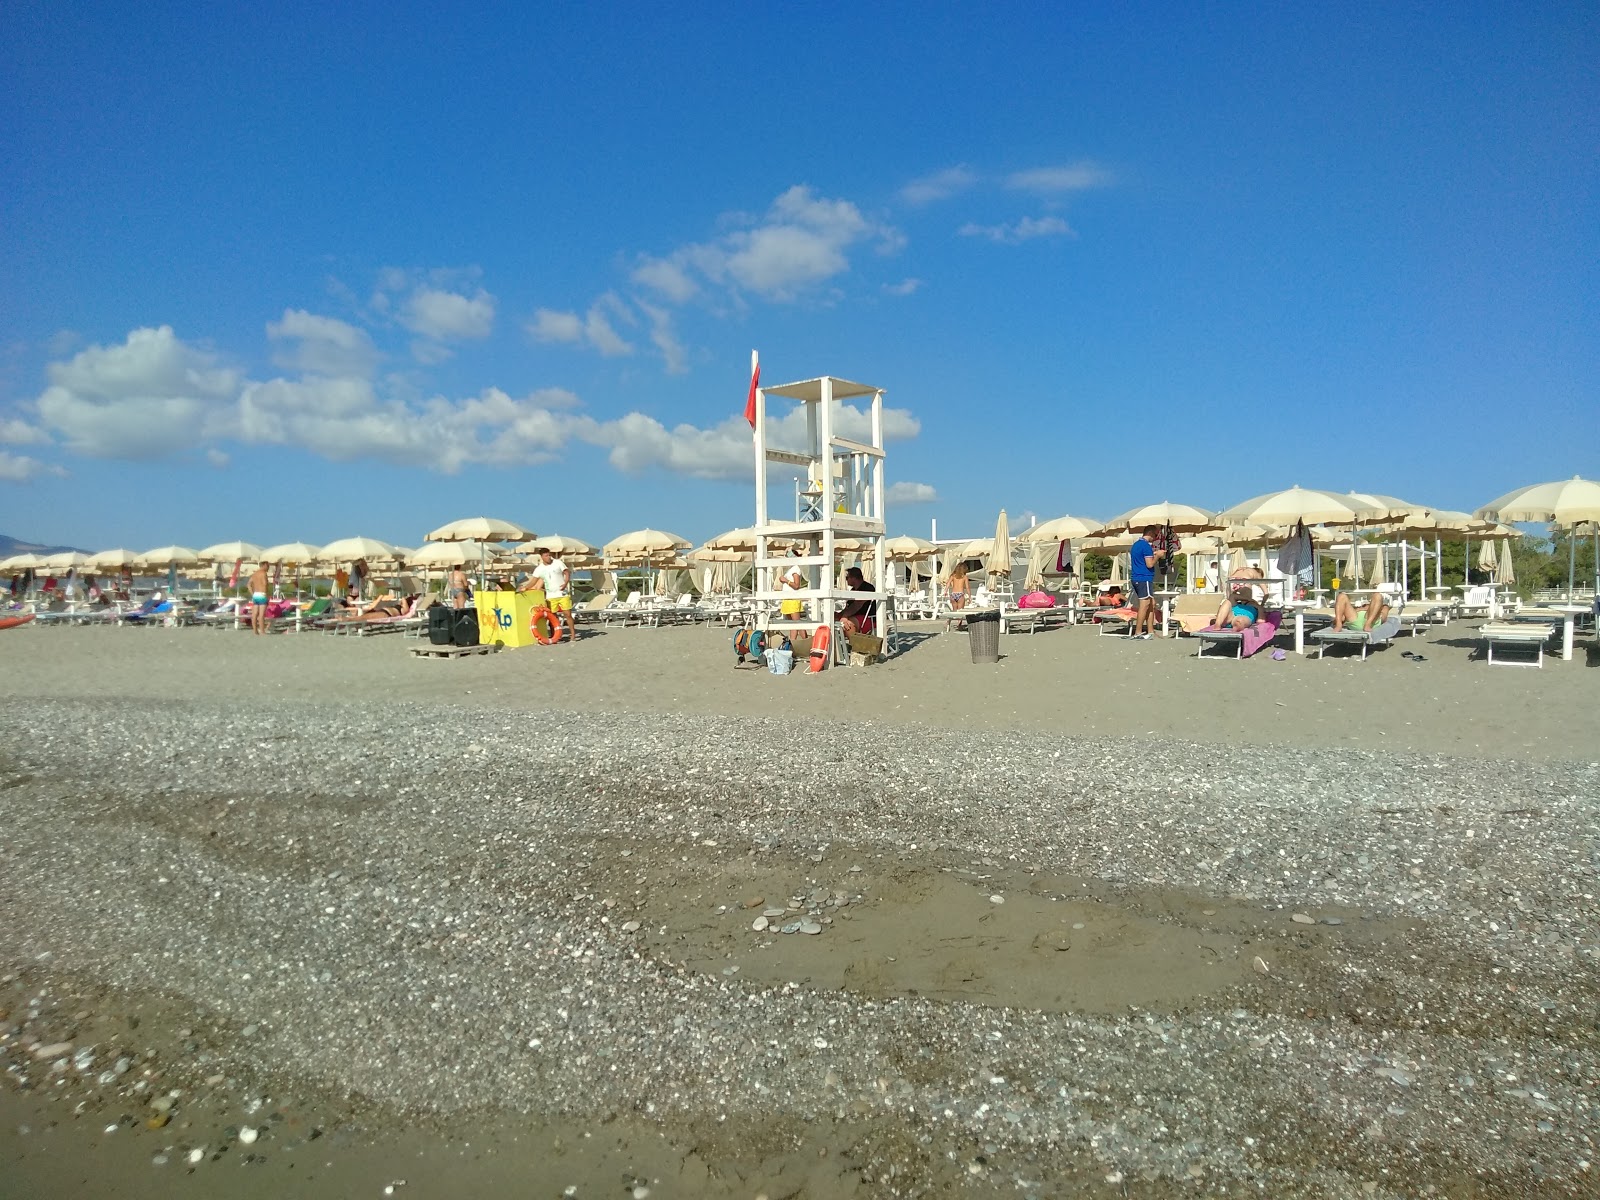 Foto de Nova Siri Scalo beach área de resort de praia